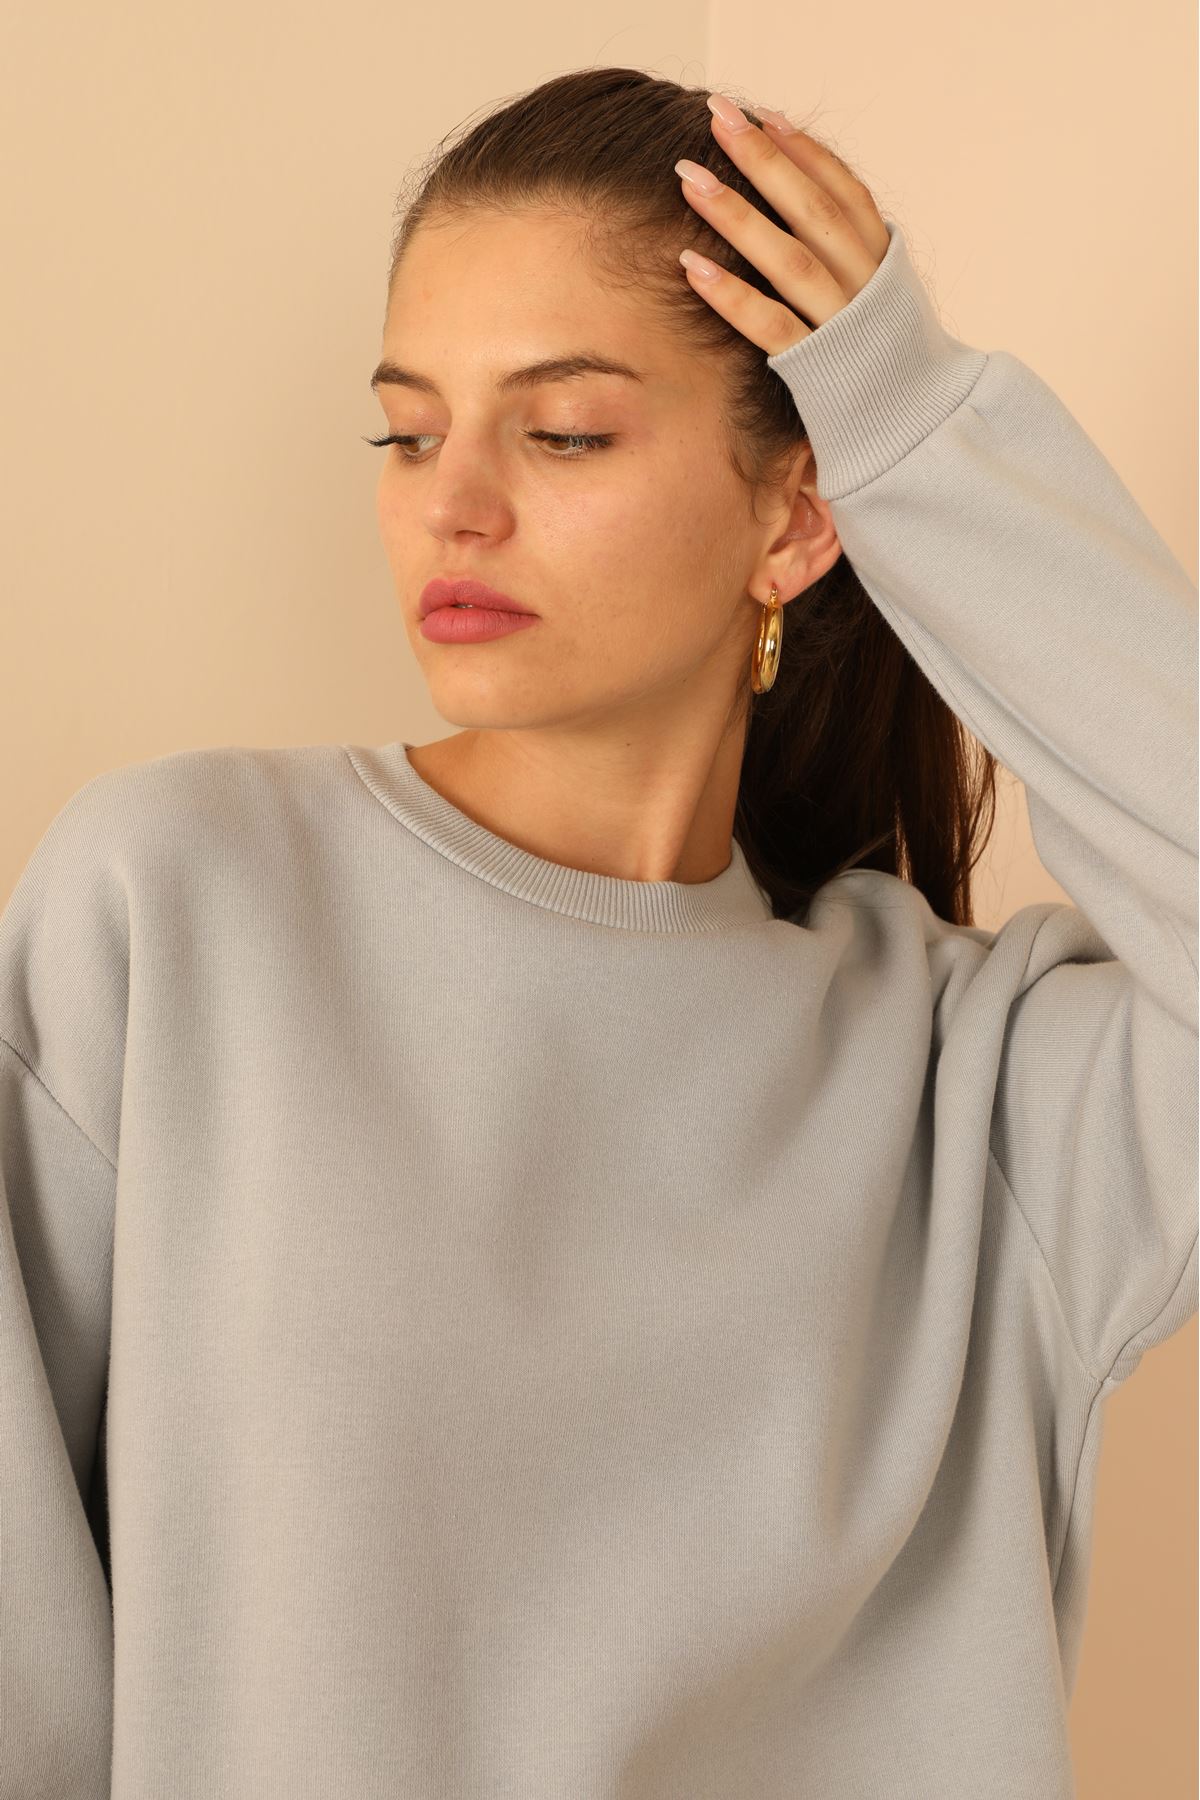 Third Knit With Wool İnside Fabric Long Sleeve Below Hip Women Sweatshirt - Grey